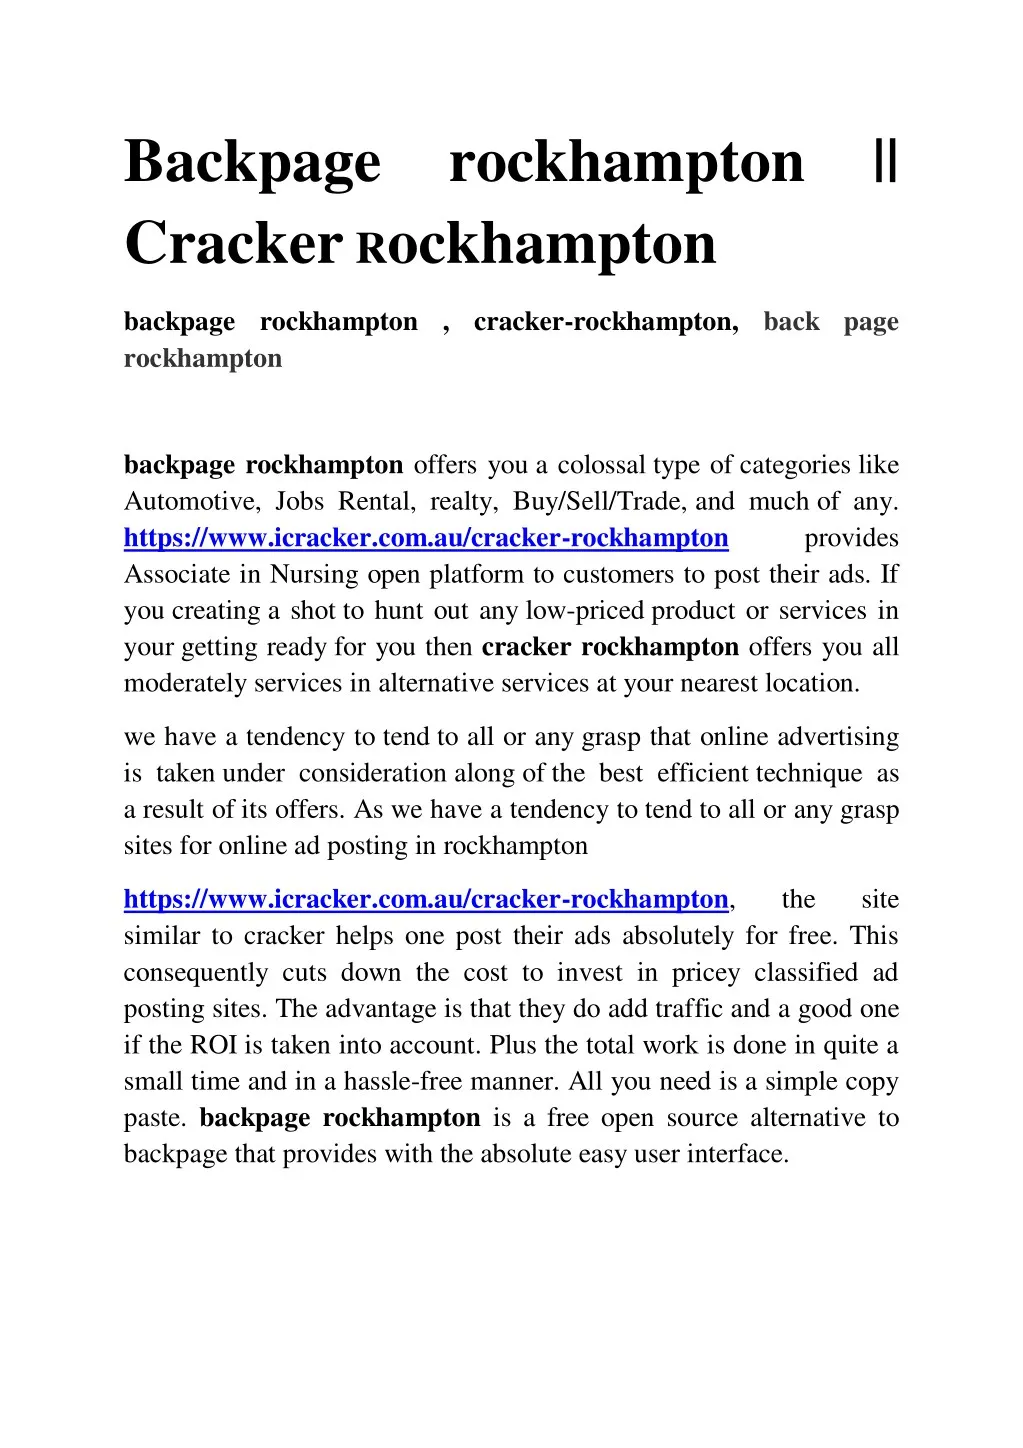 backpage rockhampton cracker r ockhampton